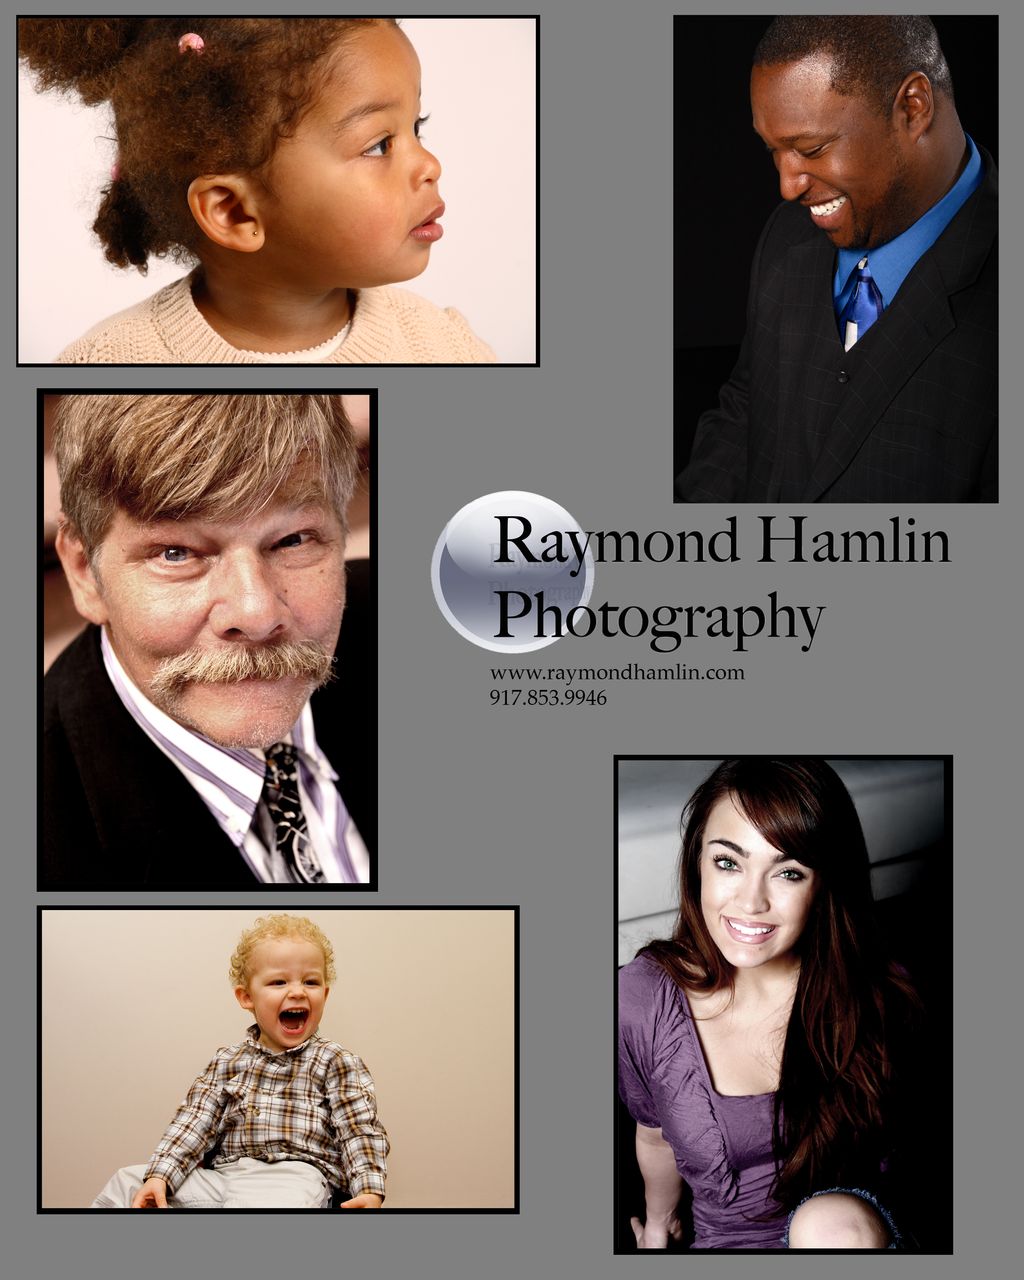 Raymond Hamlin Photography